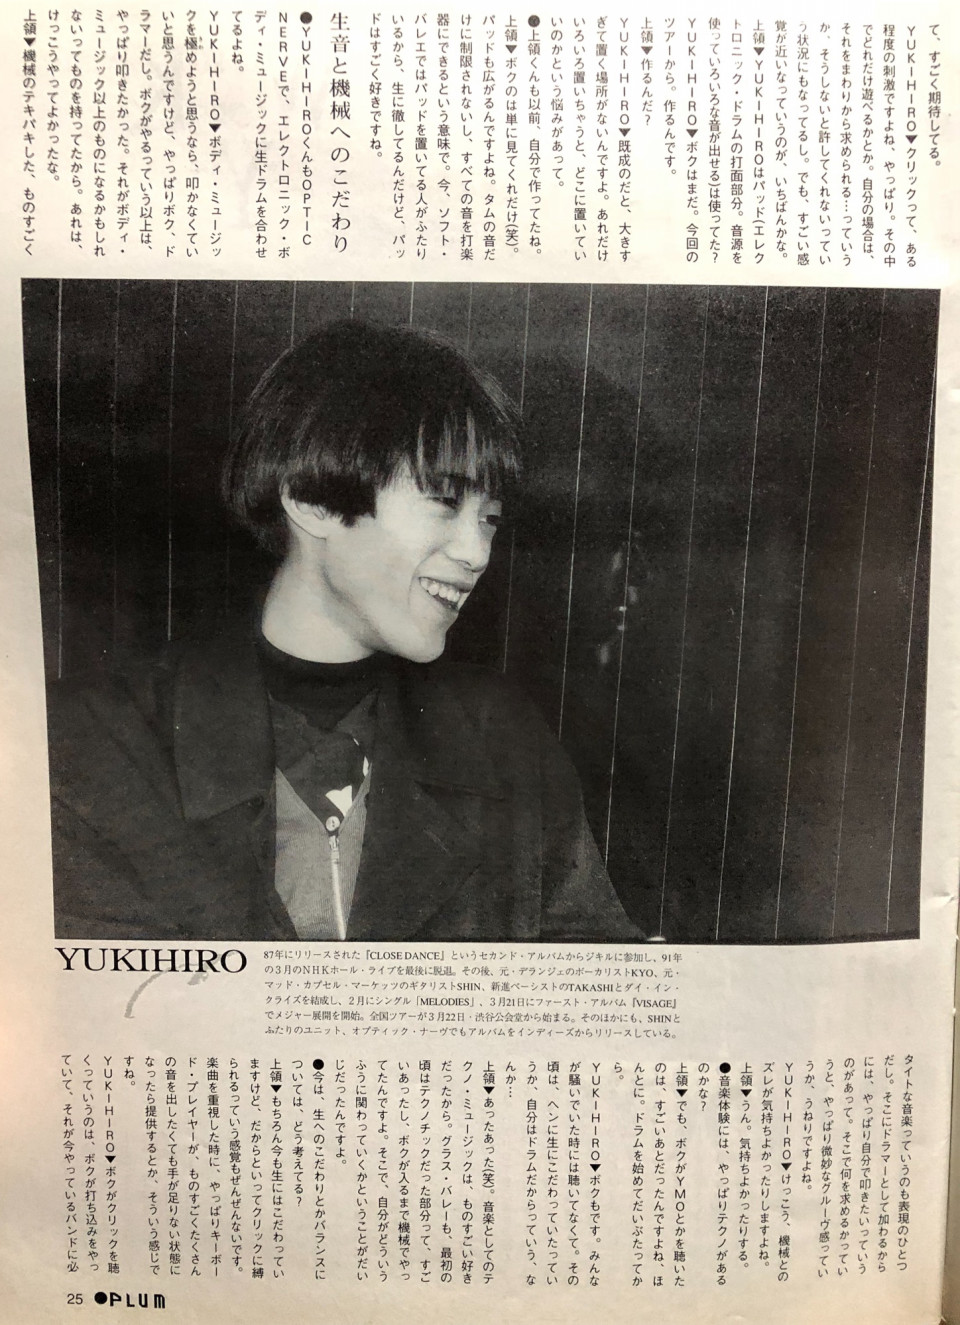 Plum1992 4 上領亘 Yukihiro対談 無題